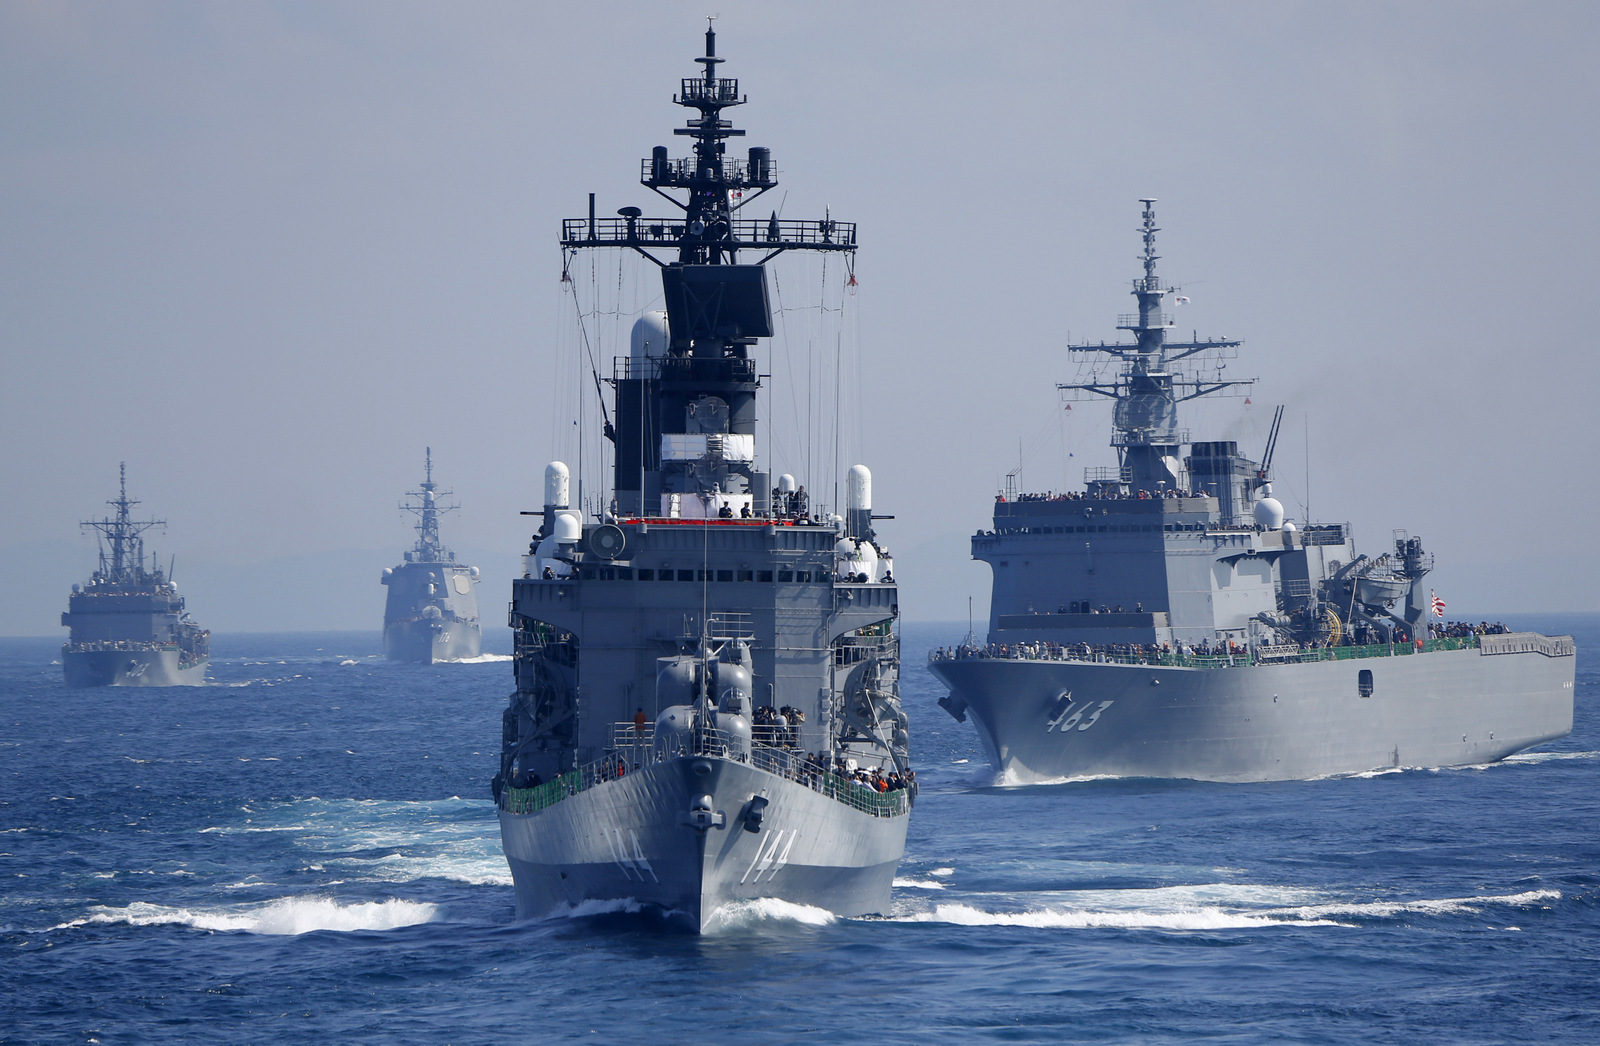 Japan Maritime Self-Defense Force (JMSDF) escort ship "Kurama" leads other vessels during a fleet review in the water off Sagami Bay, south of Tokyo. (AP/Shizuo Kambayashi)